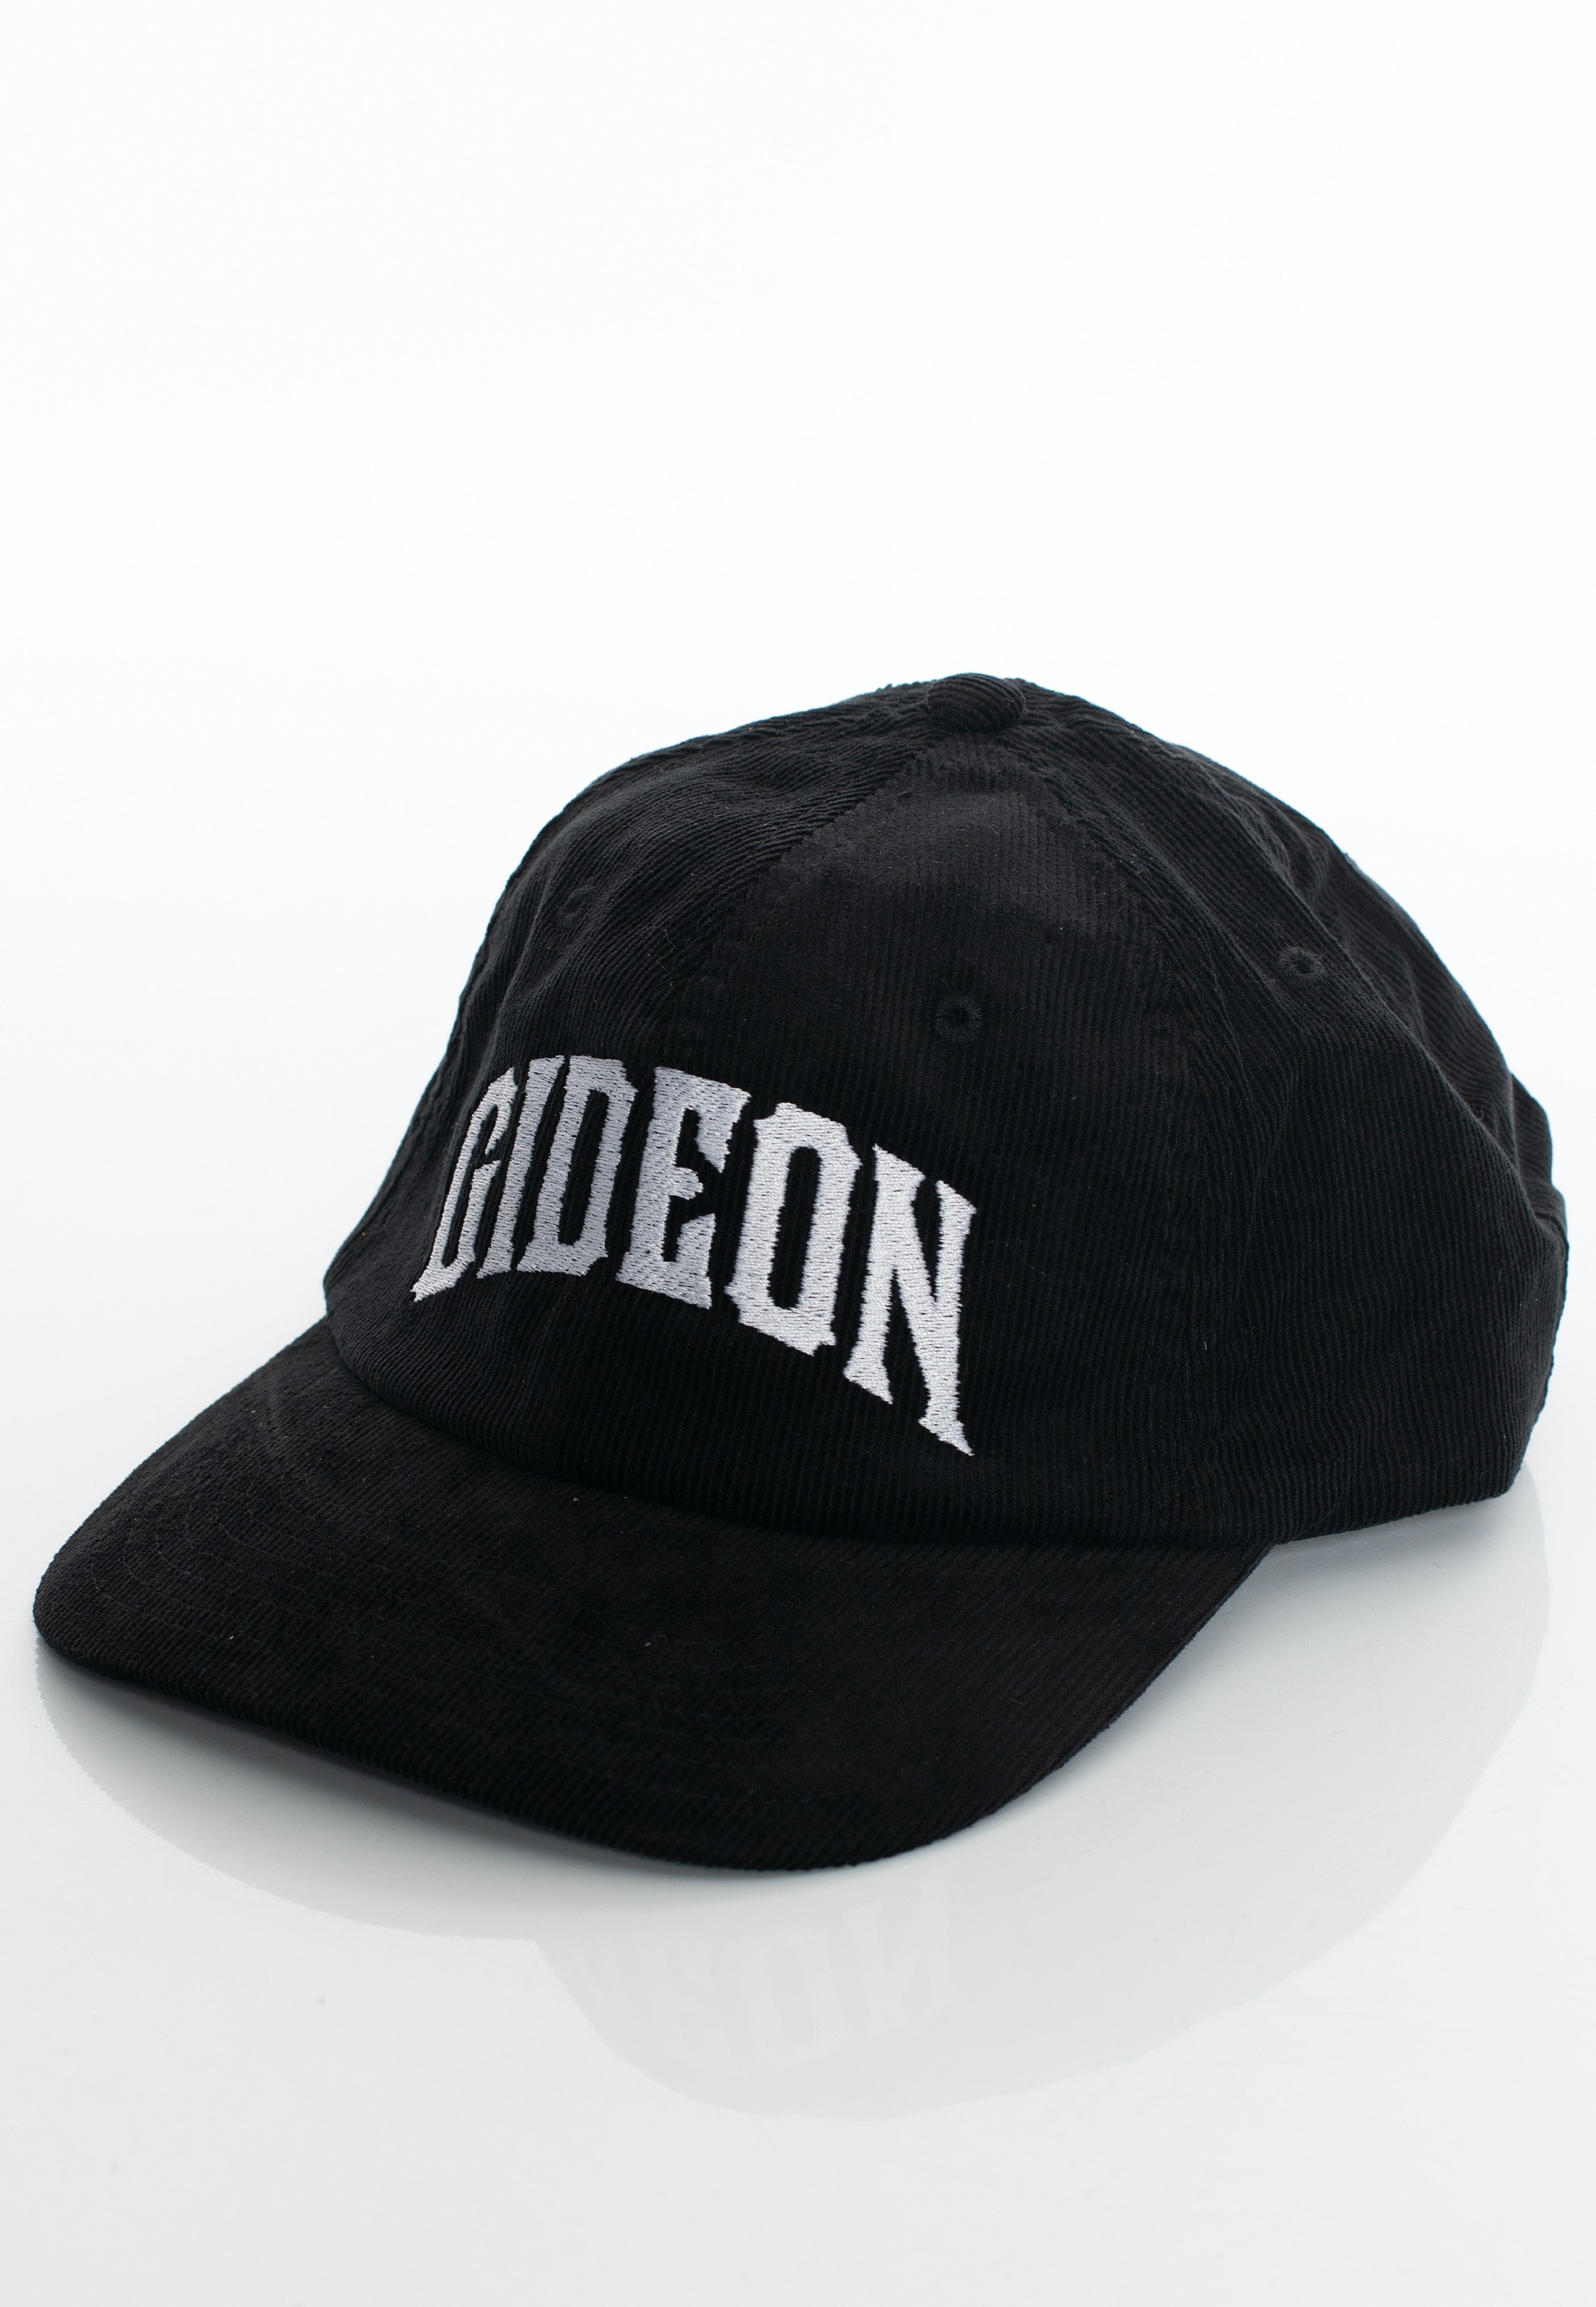 Gideon - Curved Logo Curdoroy - Cap | Neutral-Image